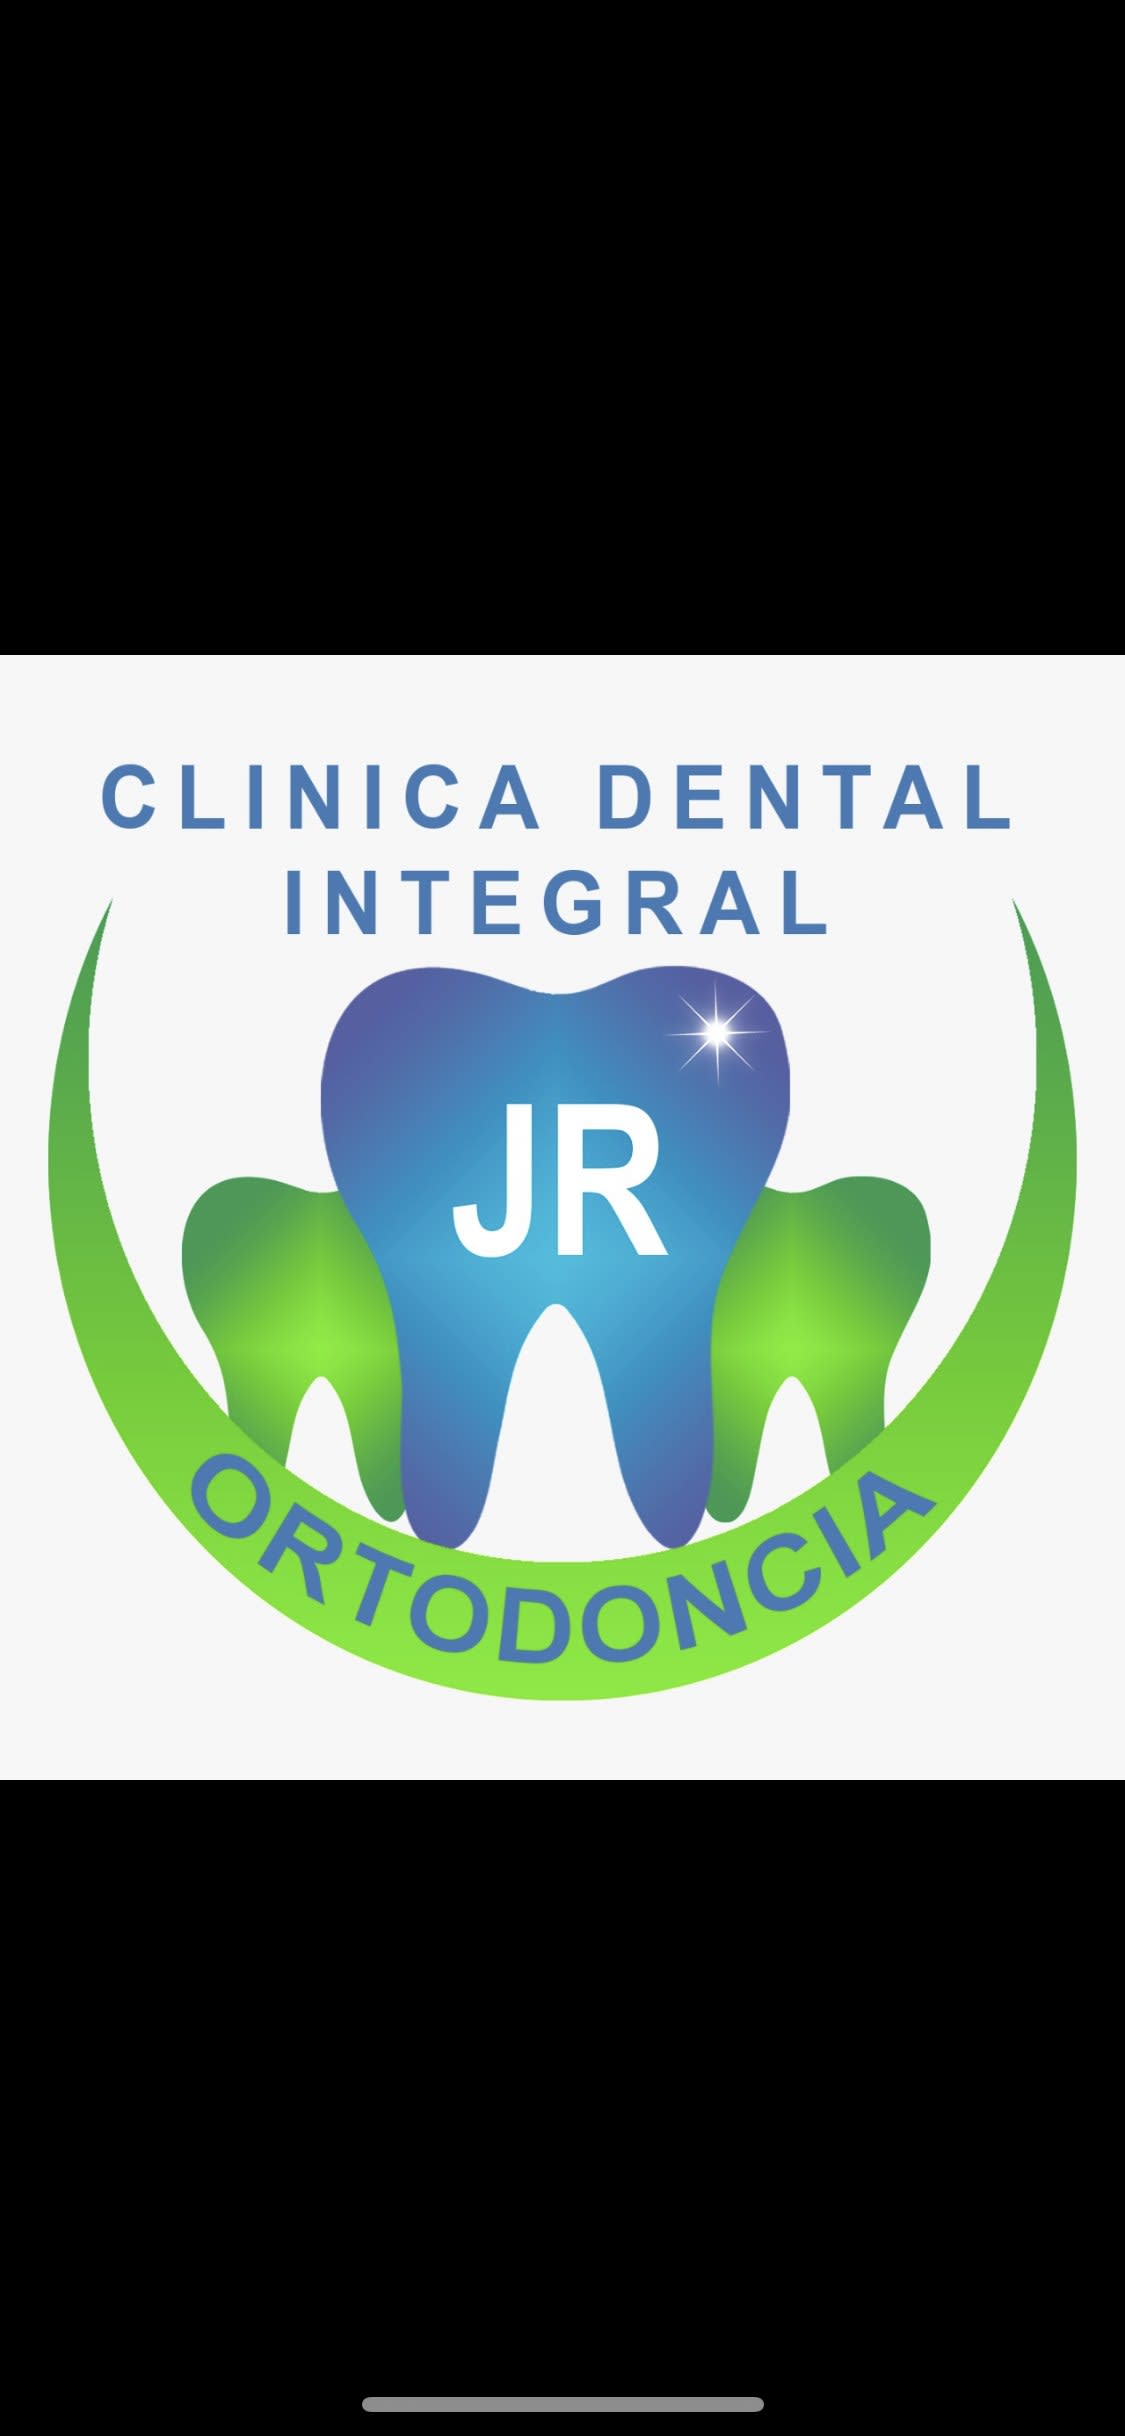 Clínica Dental Integral J.R.